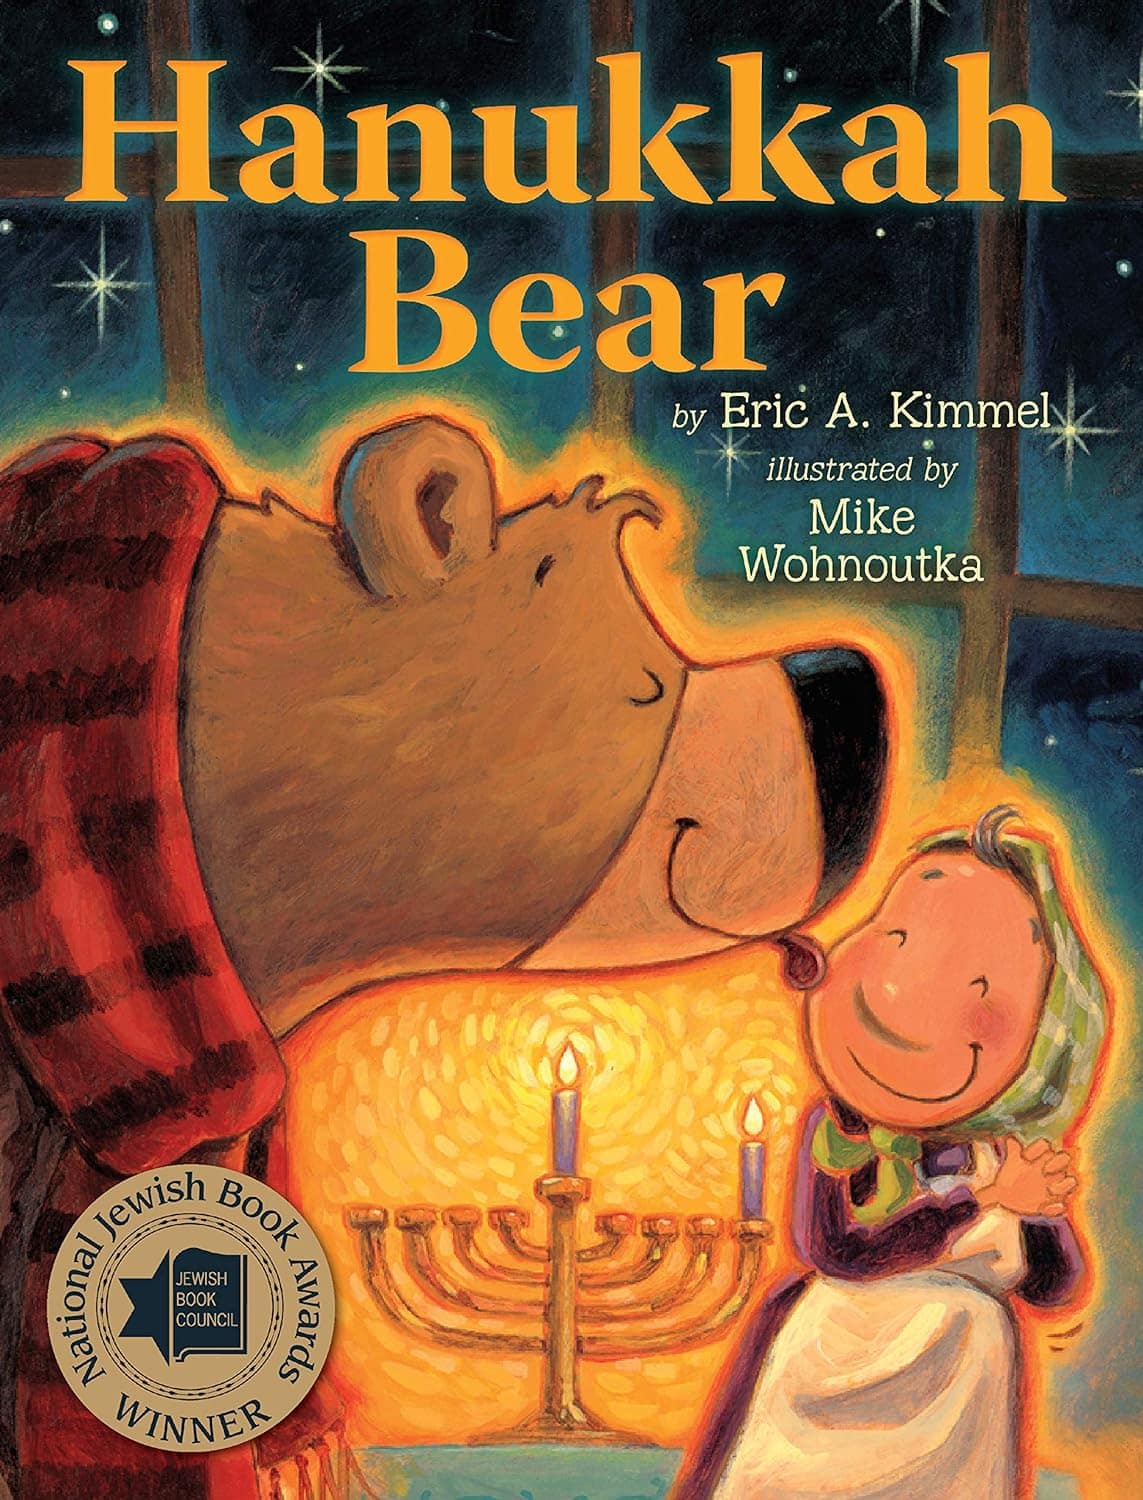 "Hanukkah Bear" by Eric A. Kimmel